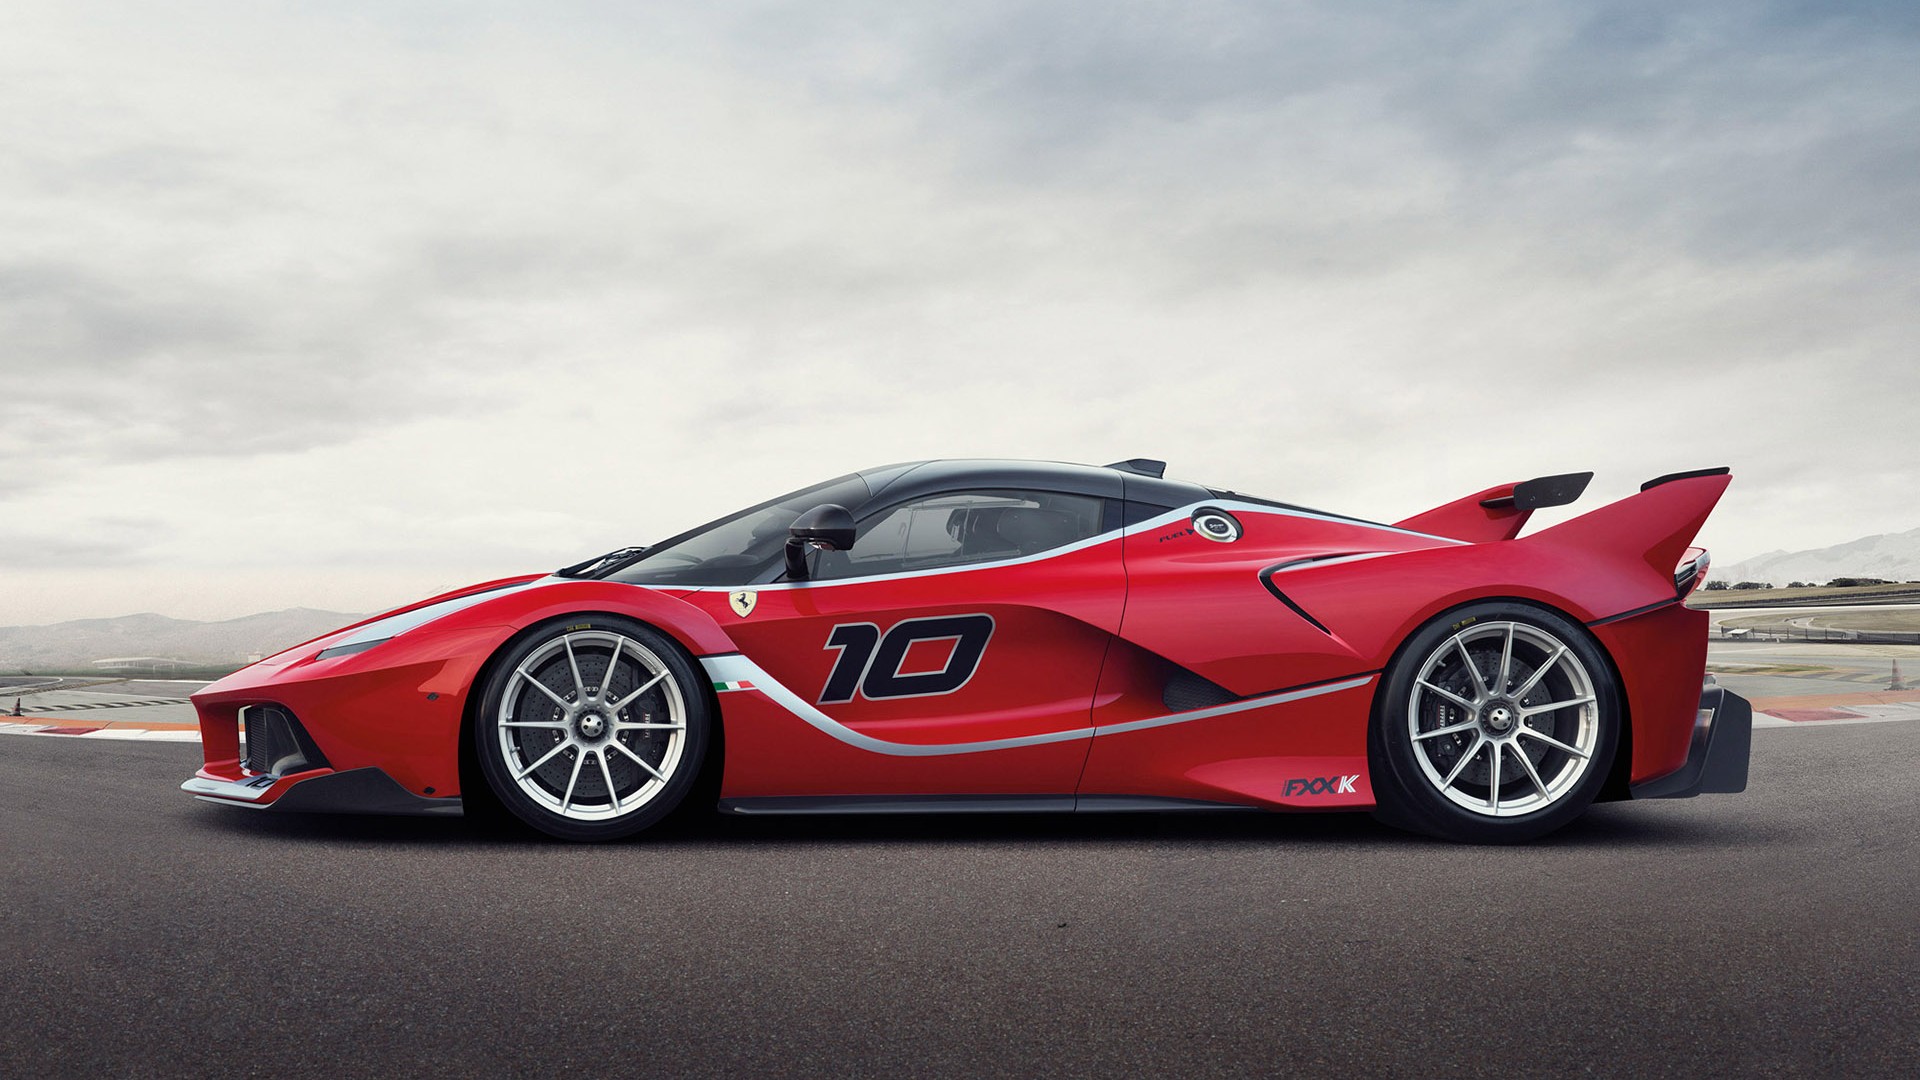 Télécharger des fonds d'écran Ferrari Fxx K 2015 HD